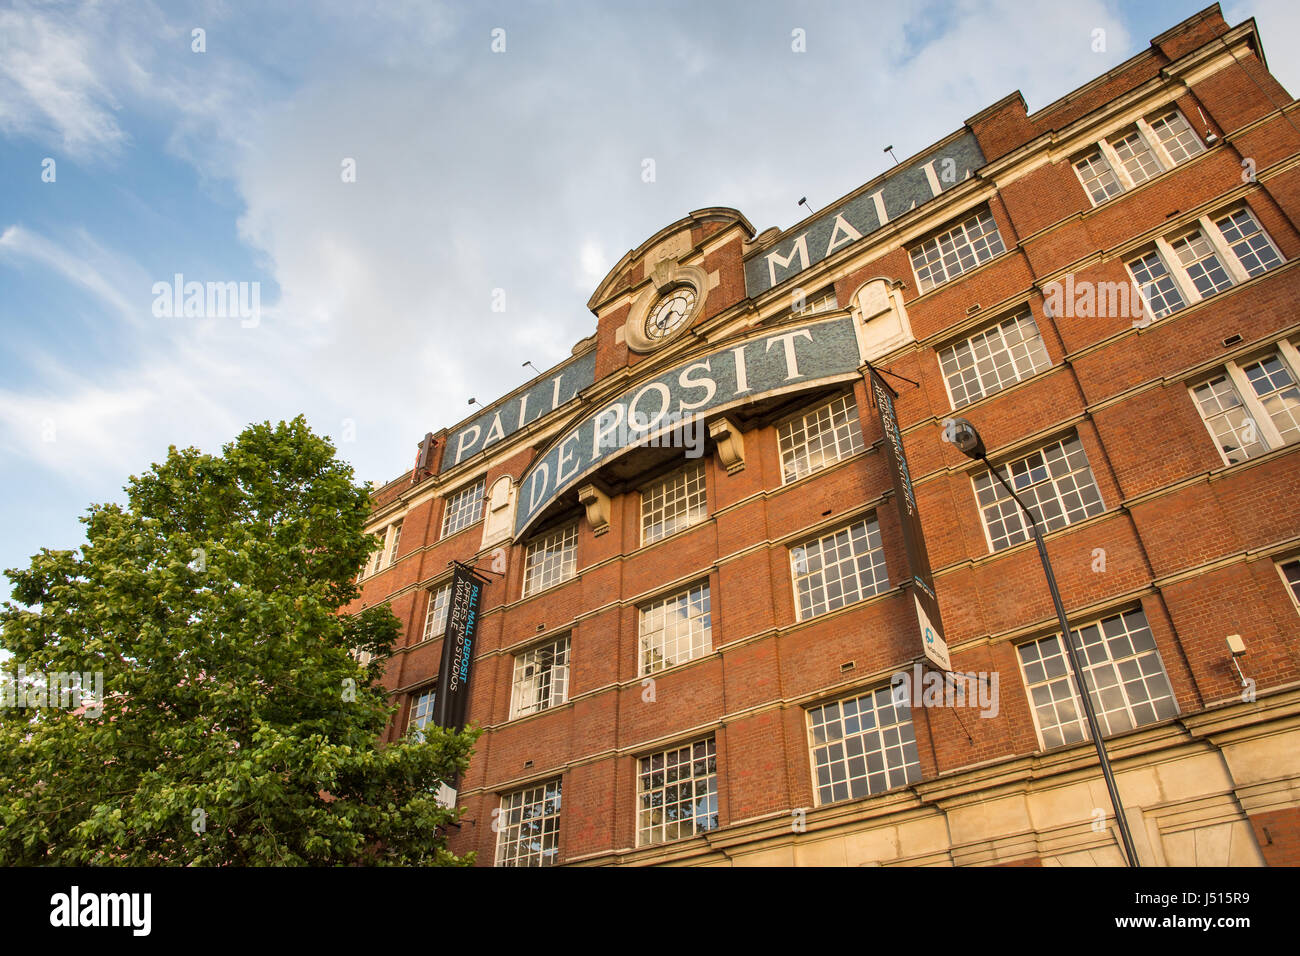 Londres, Angleterre - 10 juillet 2016 : Le 1901 de la façade en brique-Pall Mall, un coffre-entrepôt à Ladbroke Grove. Banque D'Images